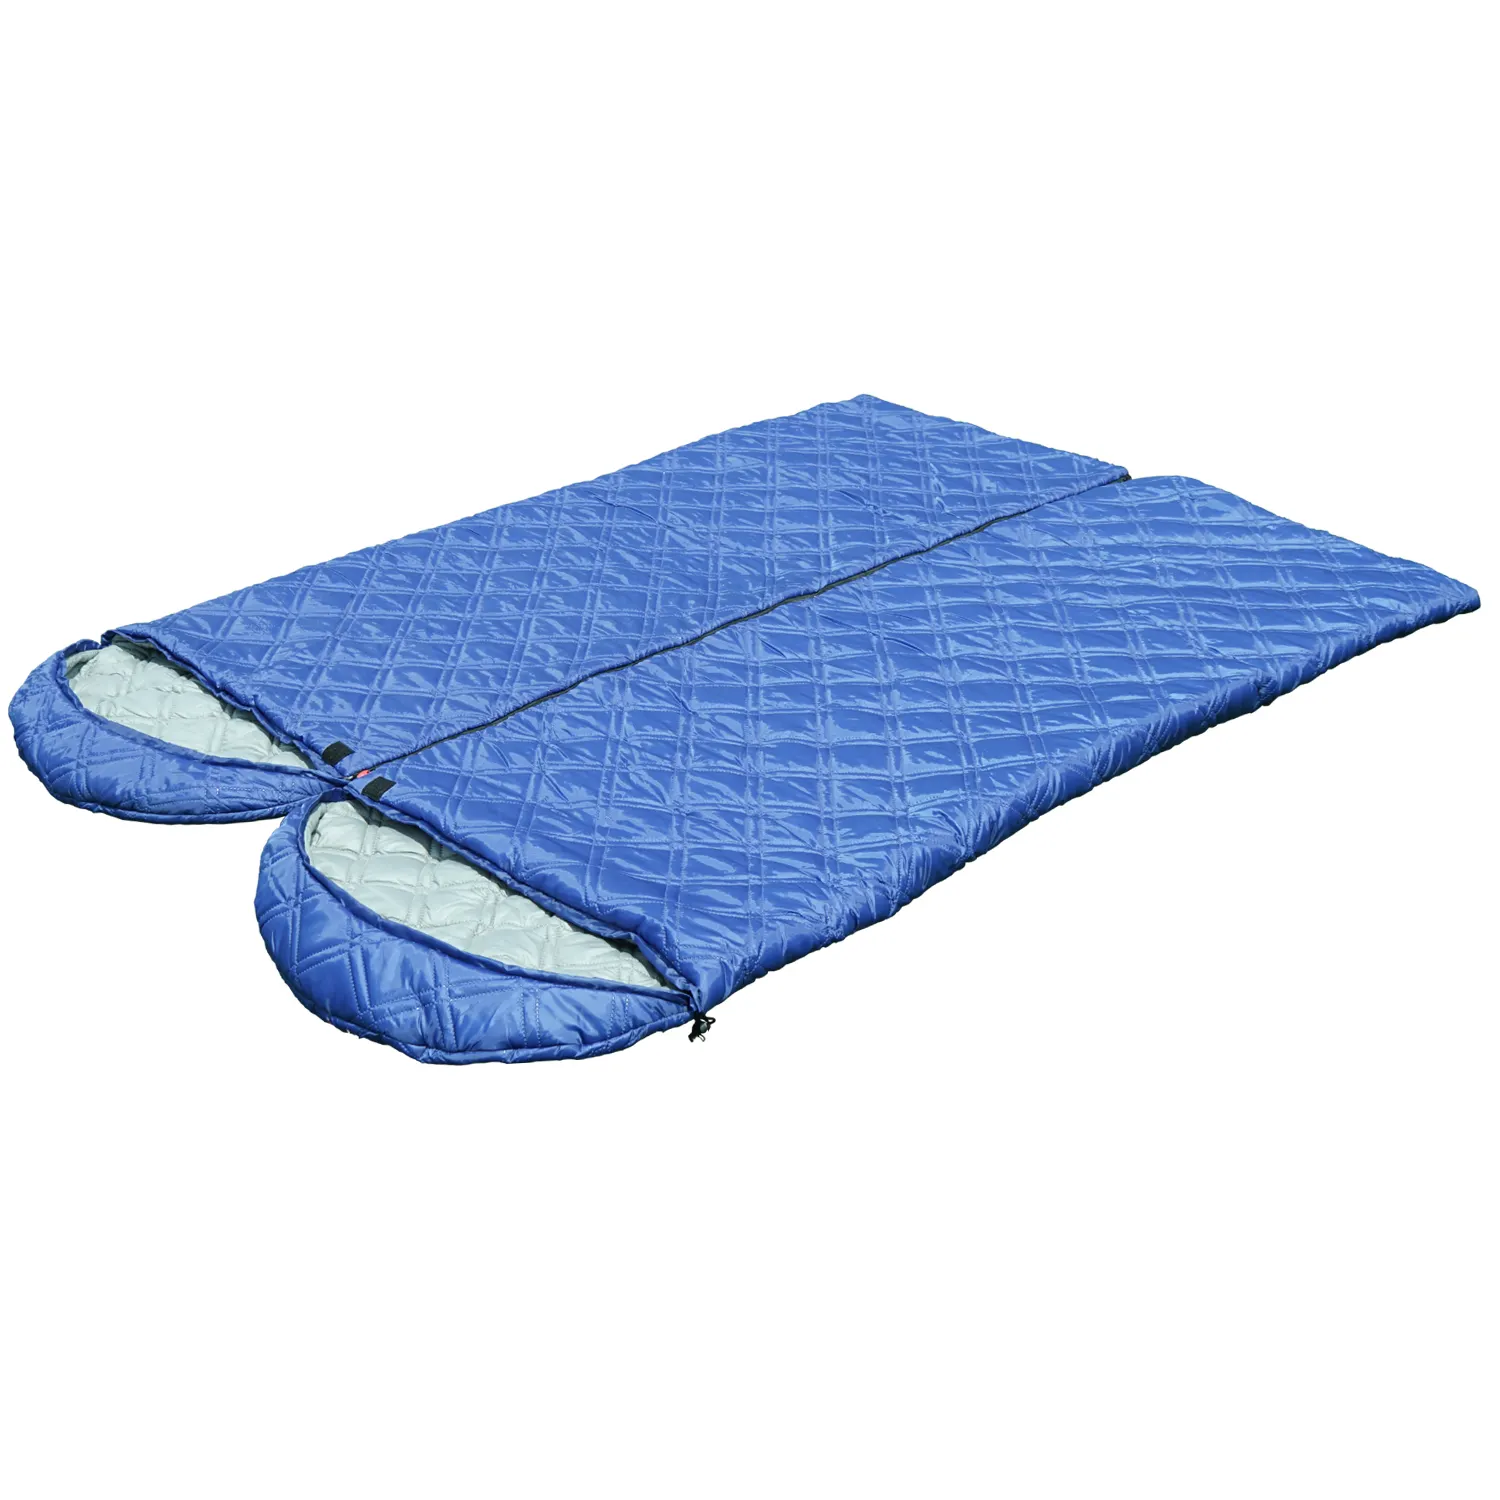 Outdoor Waterproof Double Warm Sleeping Bag with Ultrasonic Stitching Jointed Camping Hiking Envelop Sleeping Bag Hood